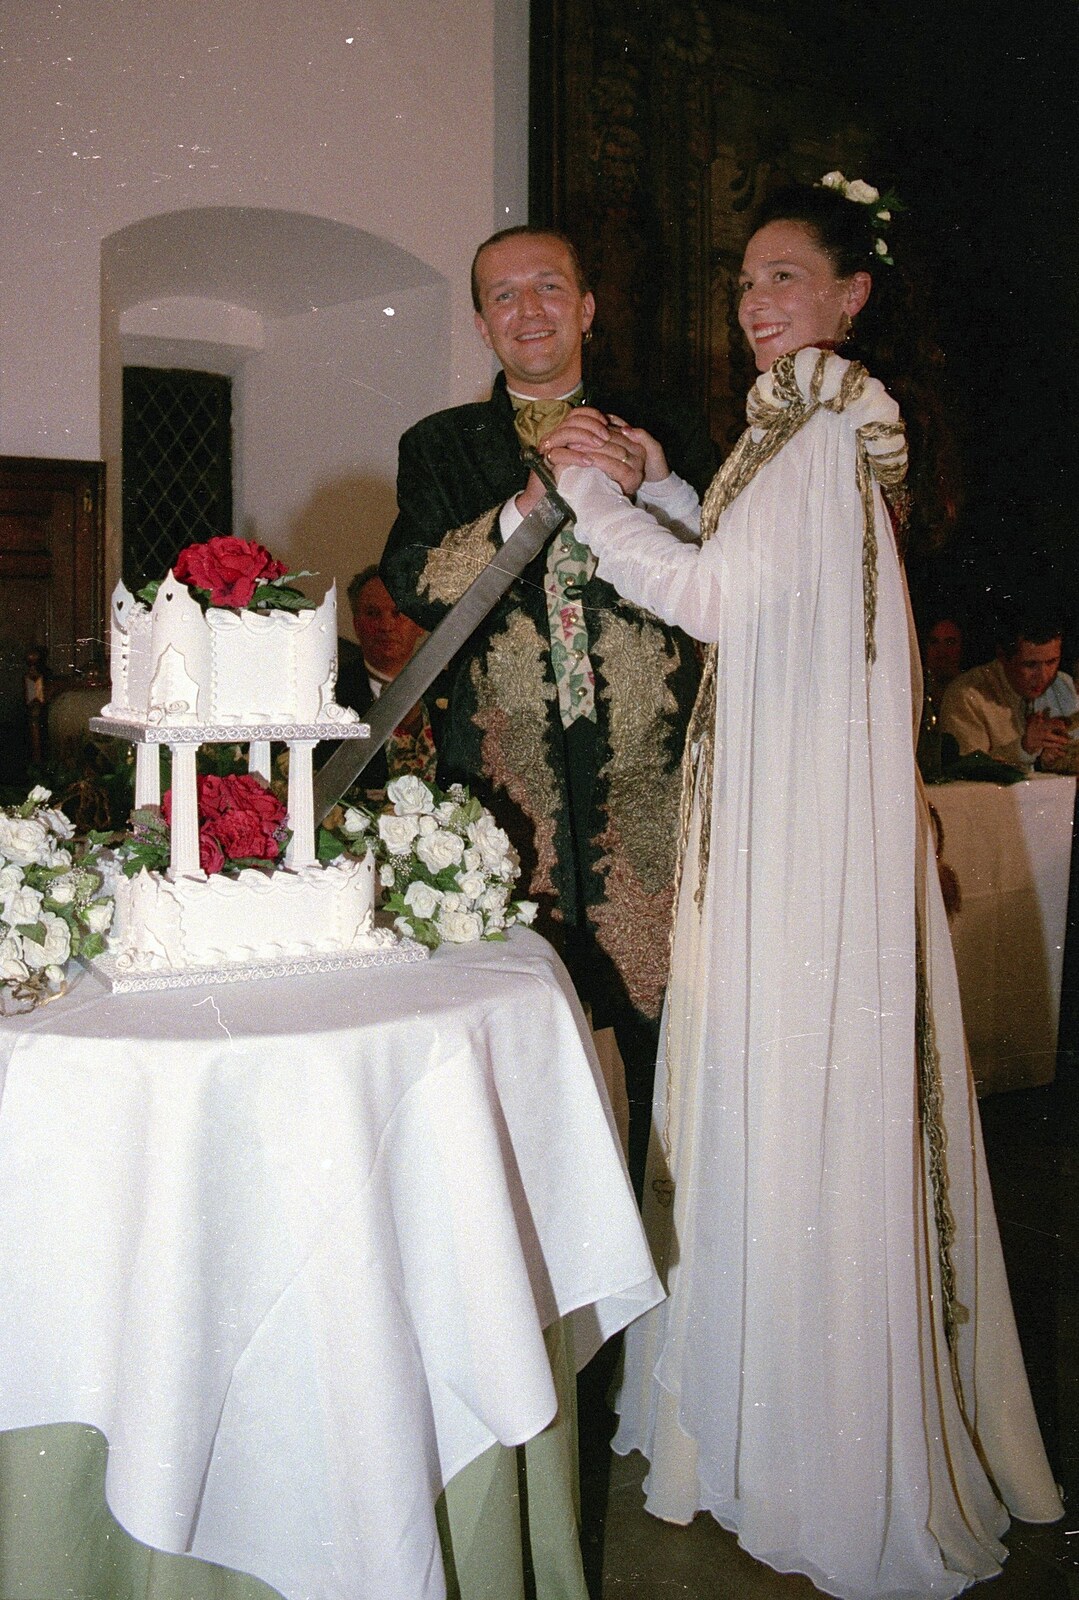 Stuart and Sarah's CISU Wedding, Naworth Castle, Brampton, Cumbria - 21st September 1996: Slicing into cake with a massive sword